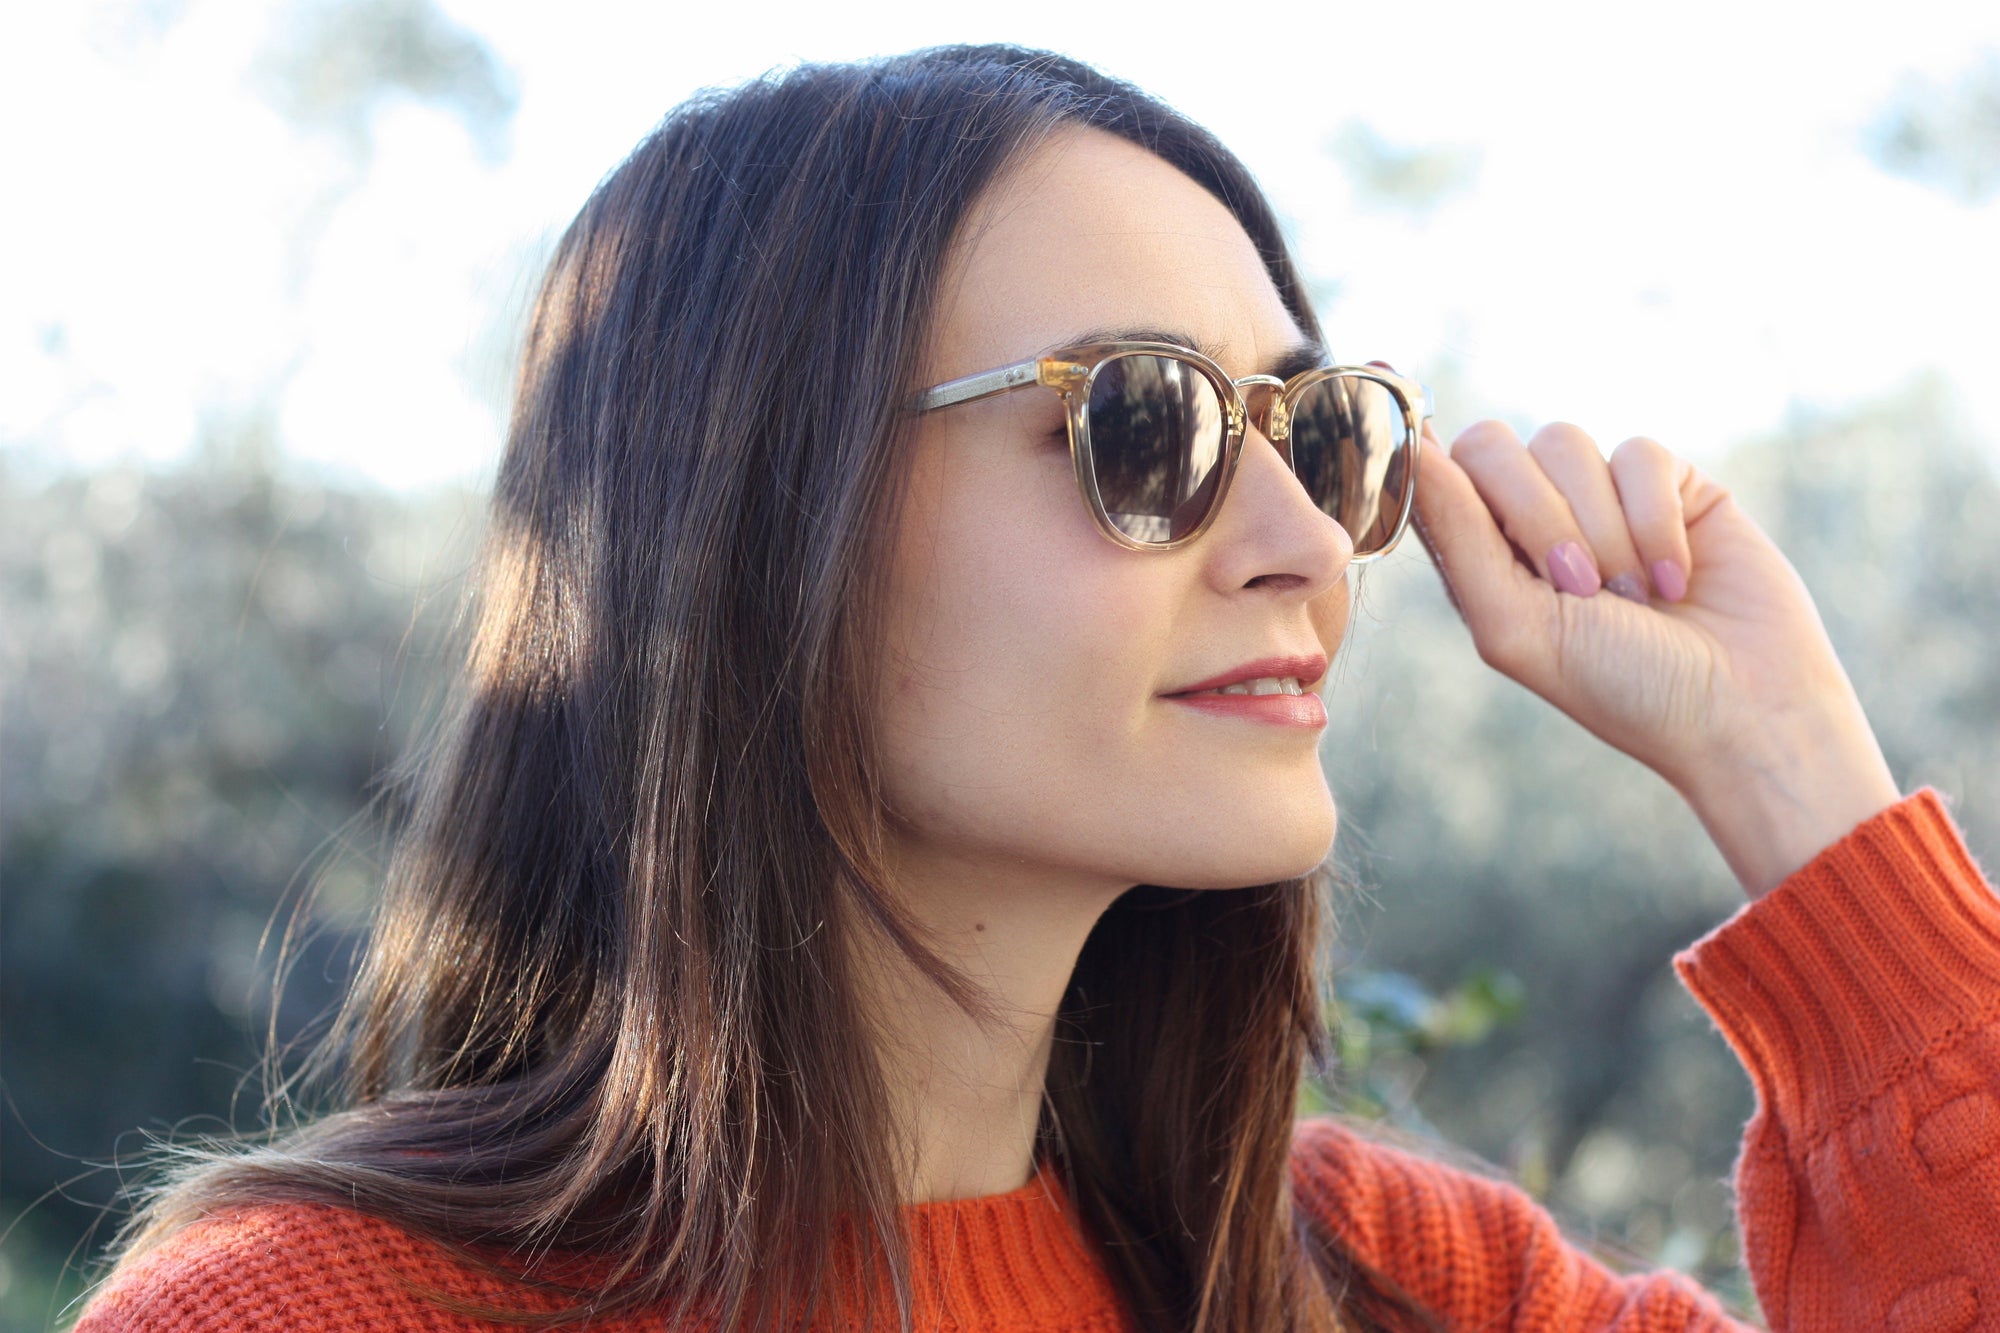 Do You Need Blue Light Glasses For Tv? | KOALAEYE OPTICAL